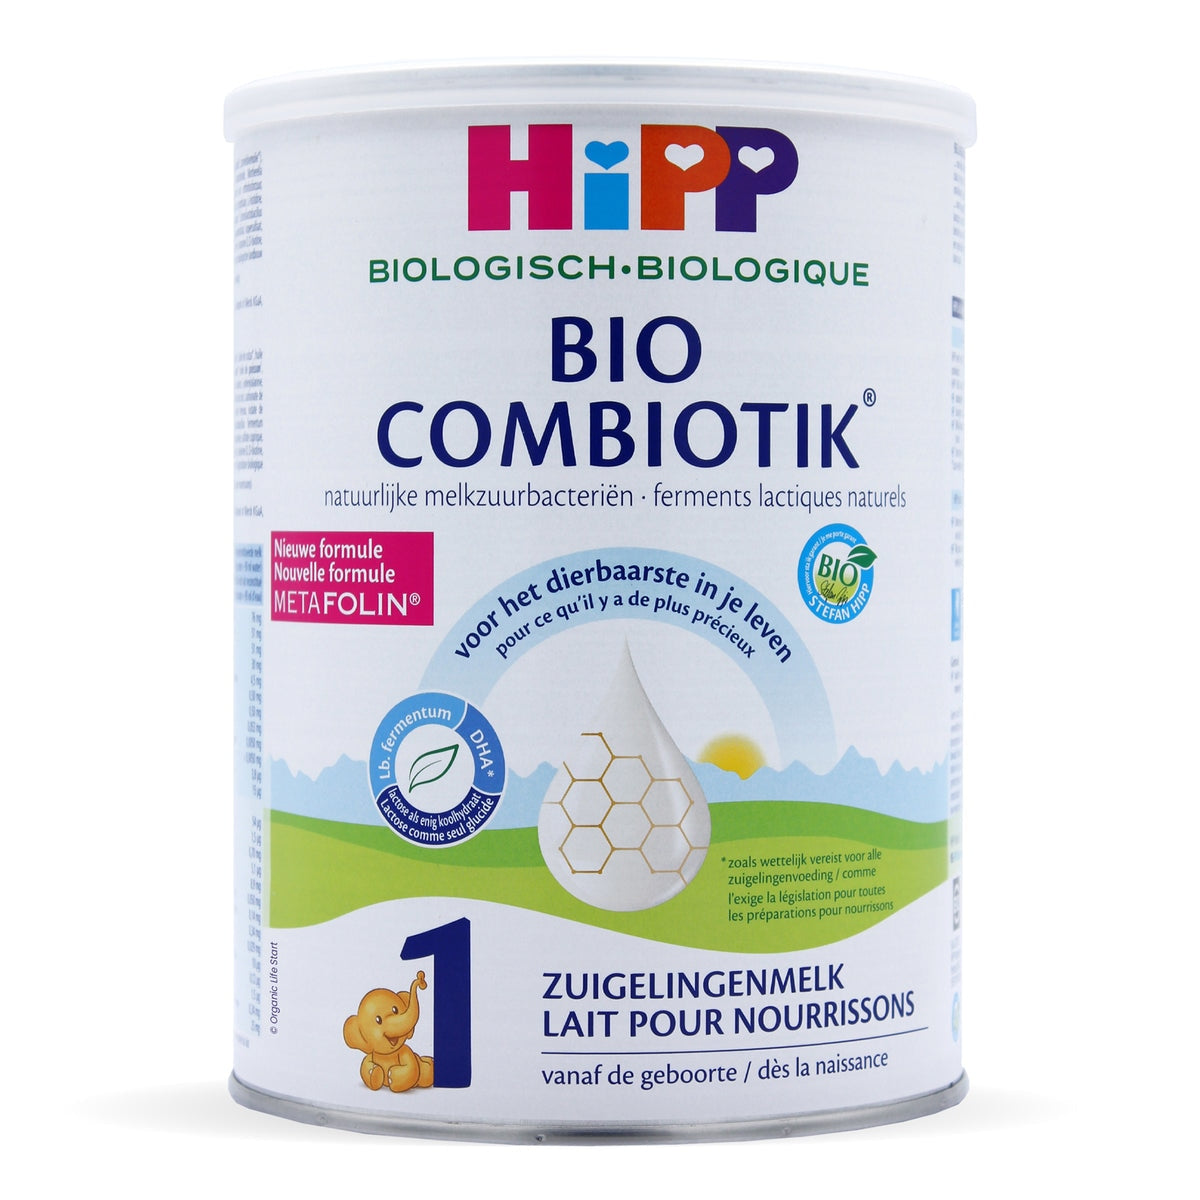 HiPP Dutch Bio Stage 1 - Organic European Baby Formula